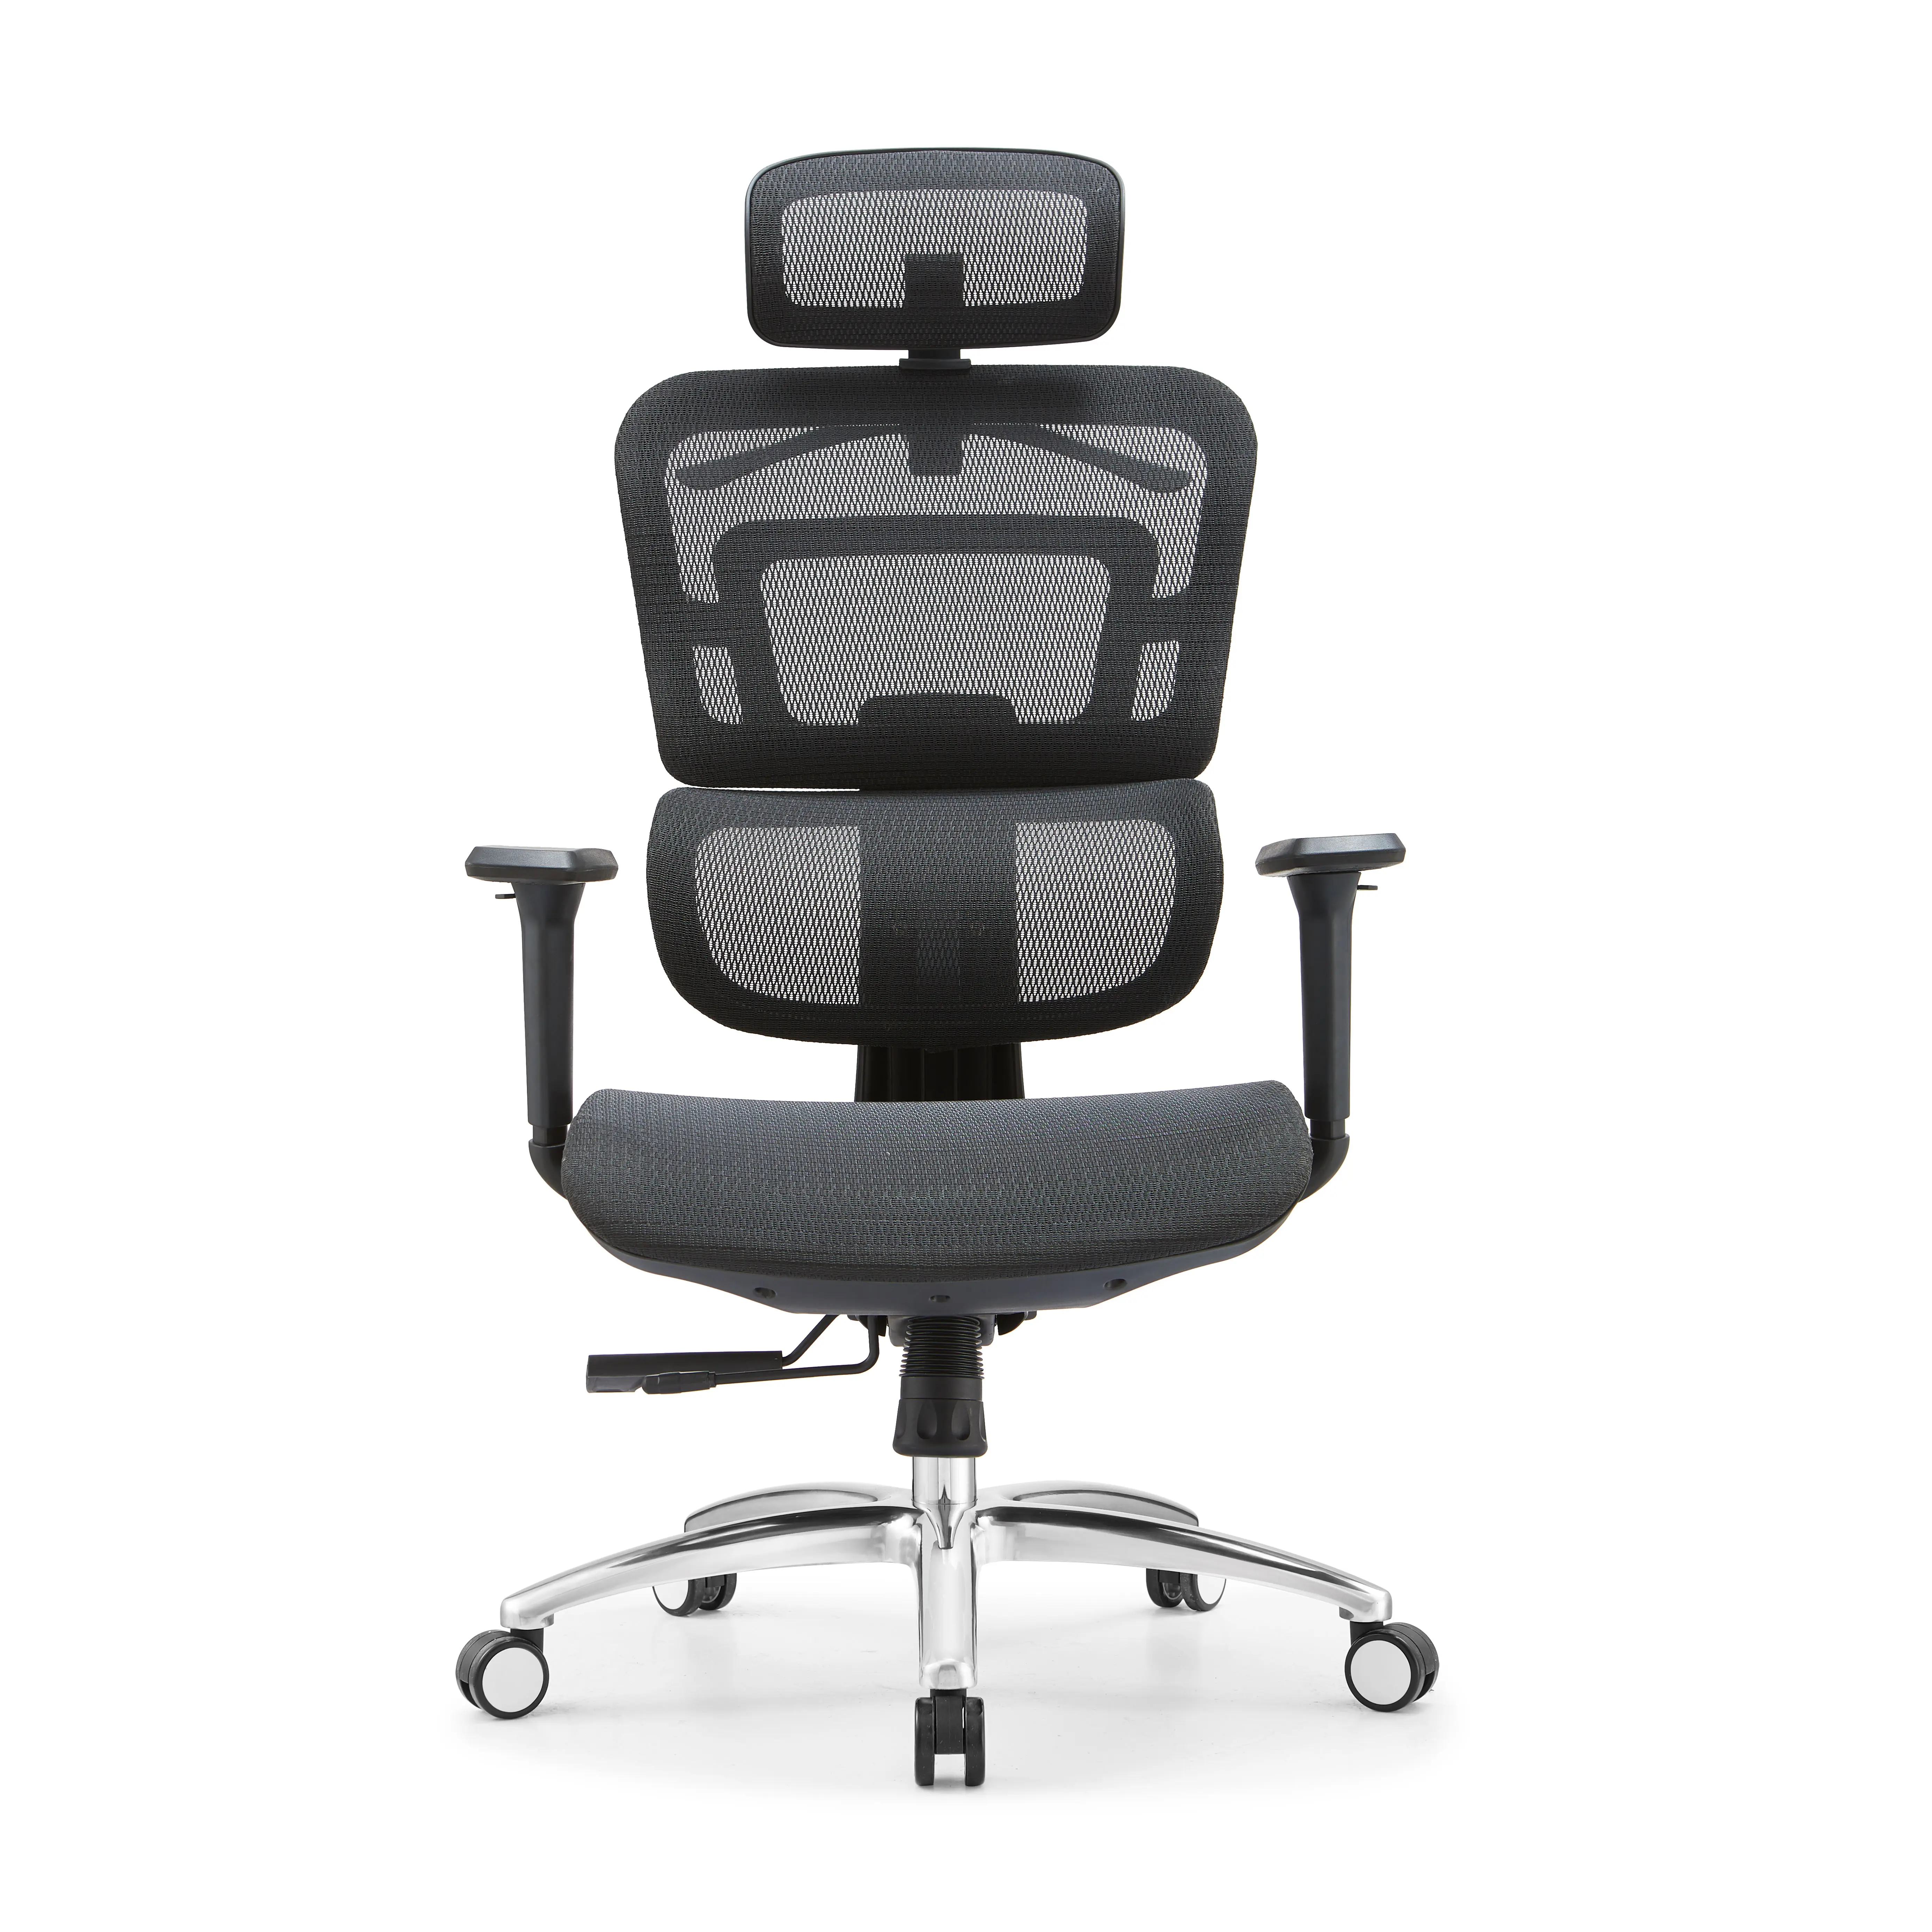 Luxury cadeira Executiva Boss Ergonomic Office Chairs wholesale sillas de oficina